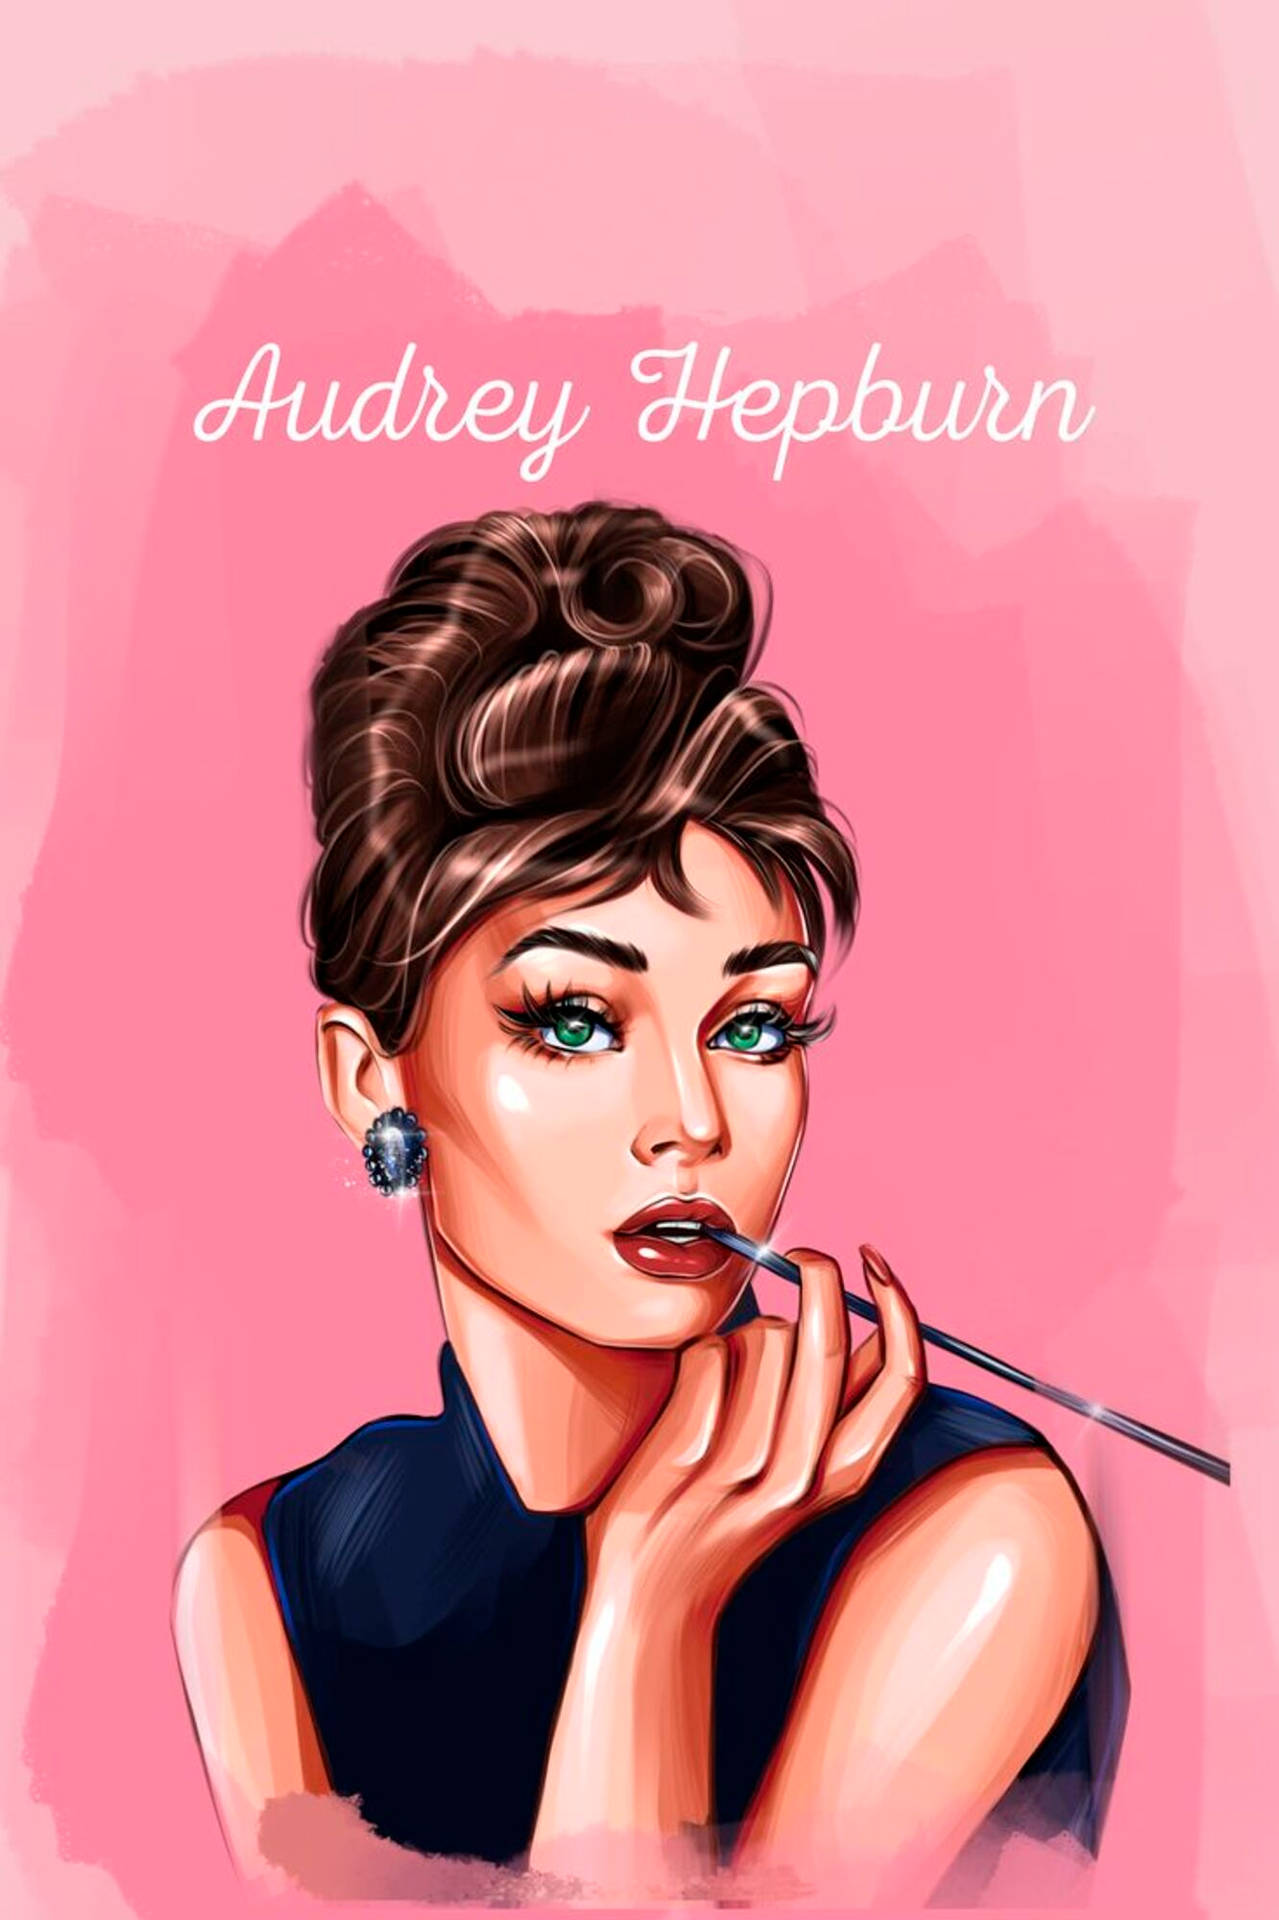 Audrey Hepburn Digital Art Background